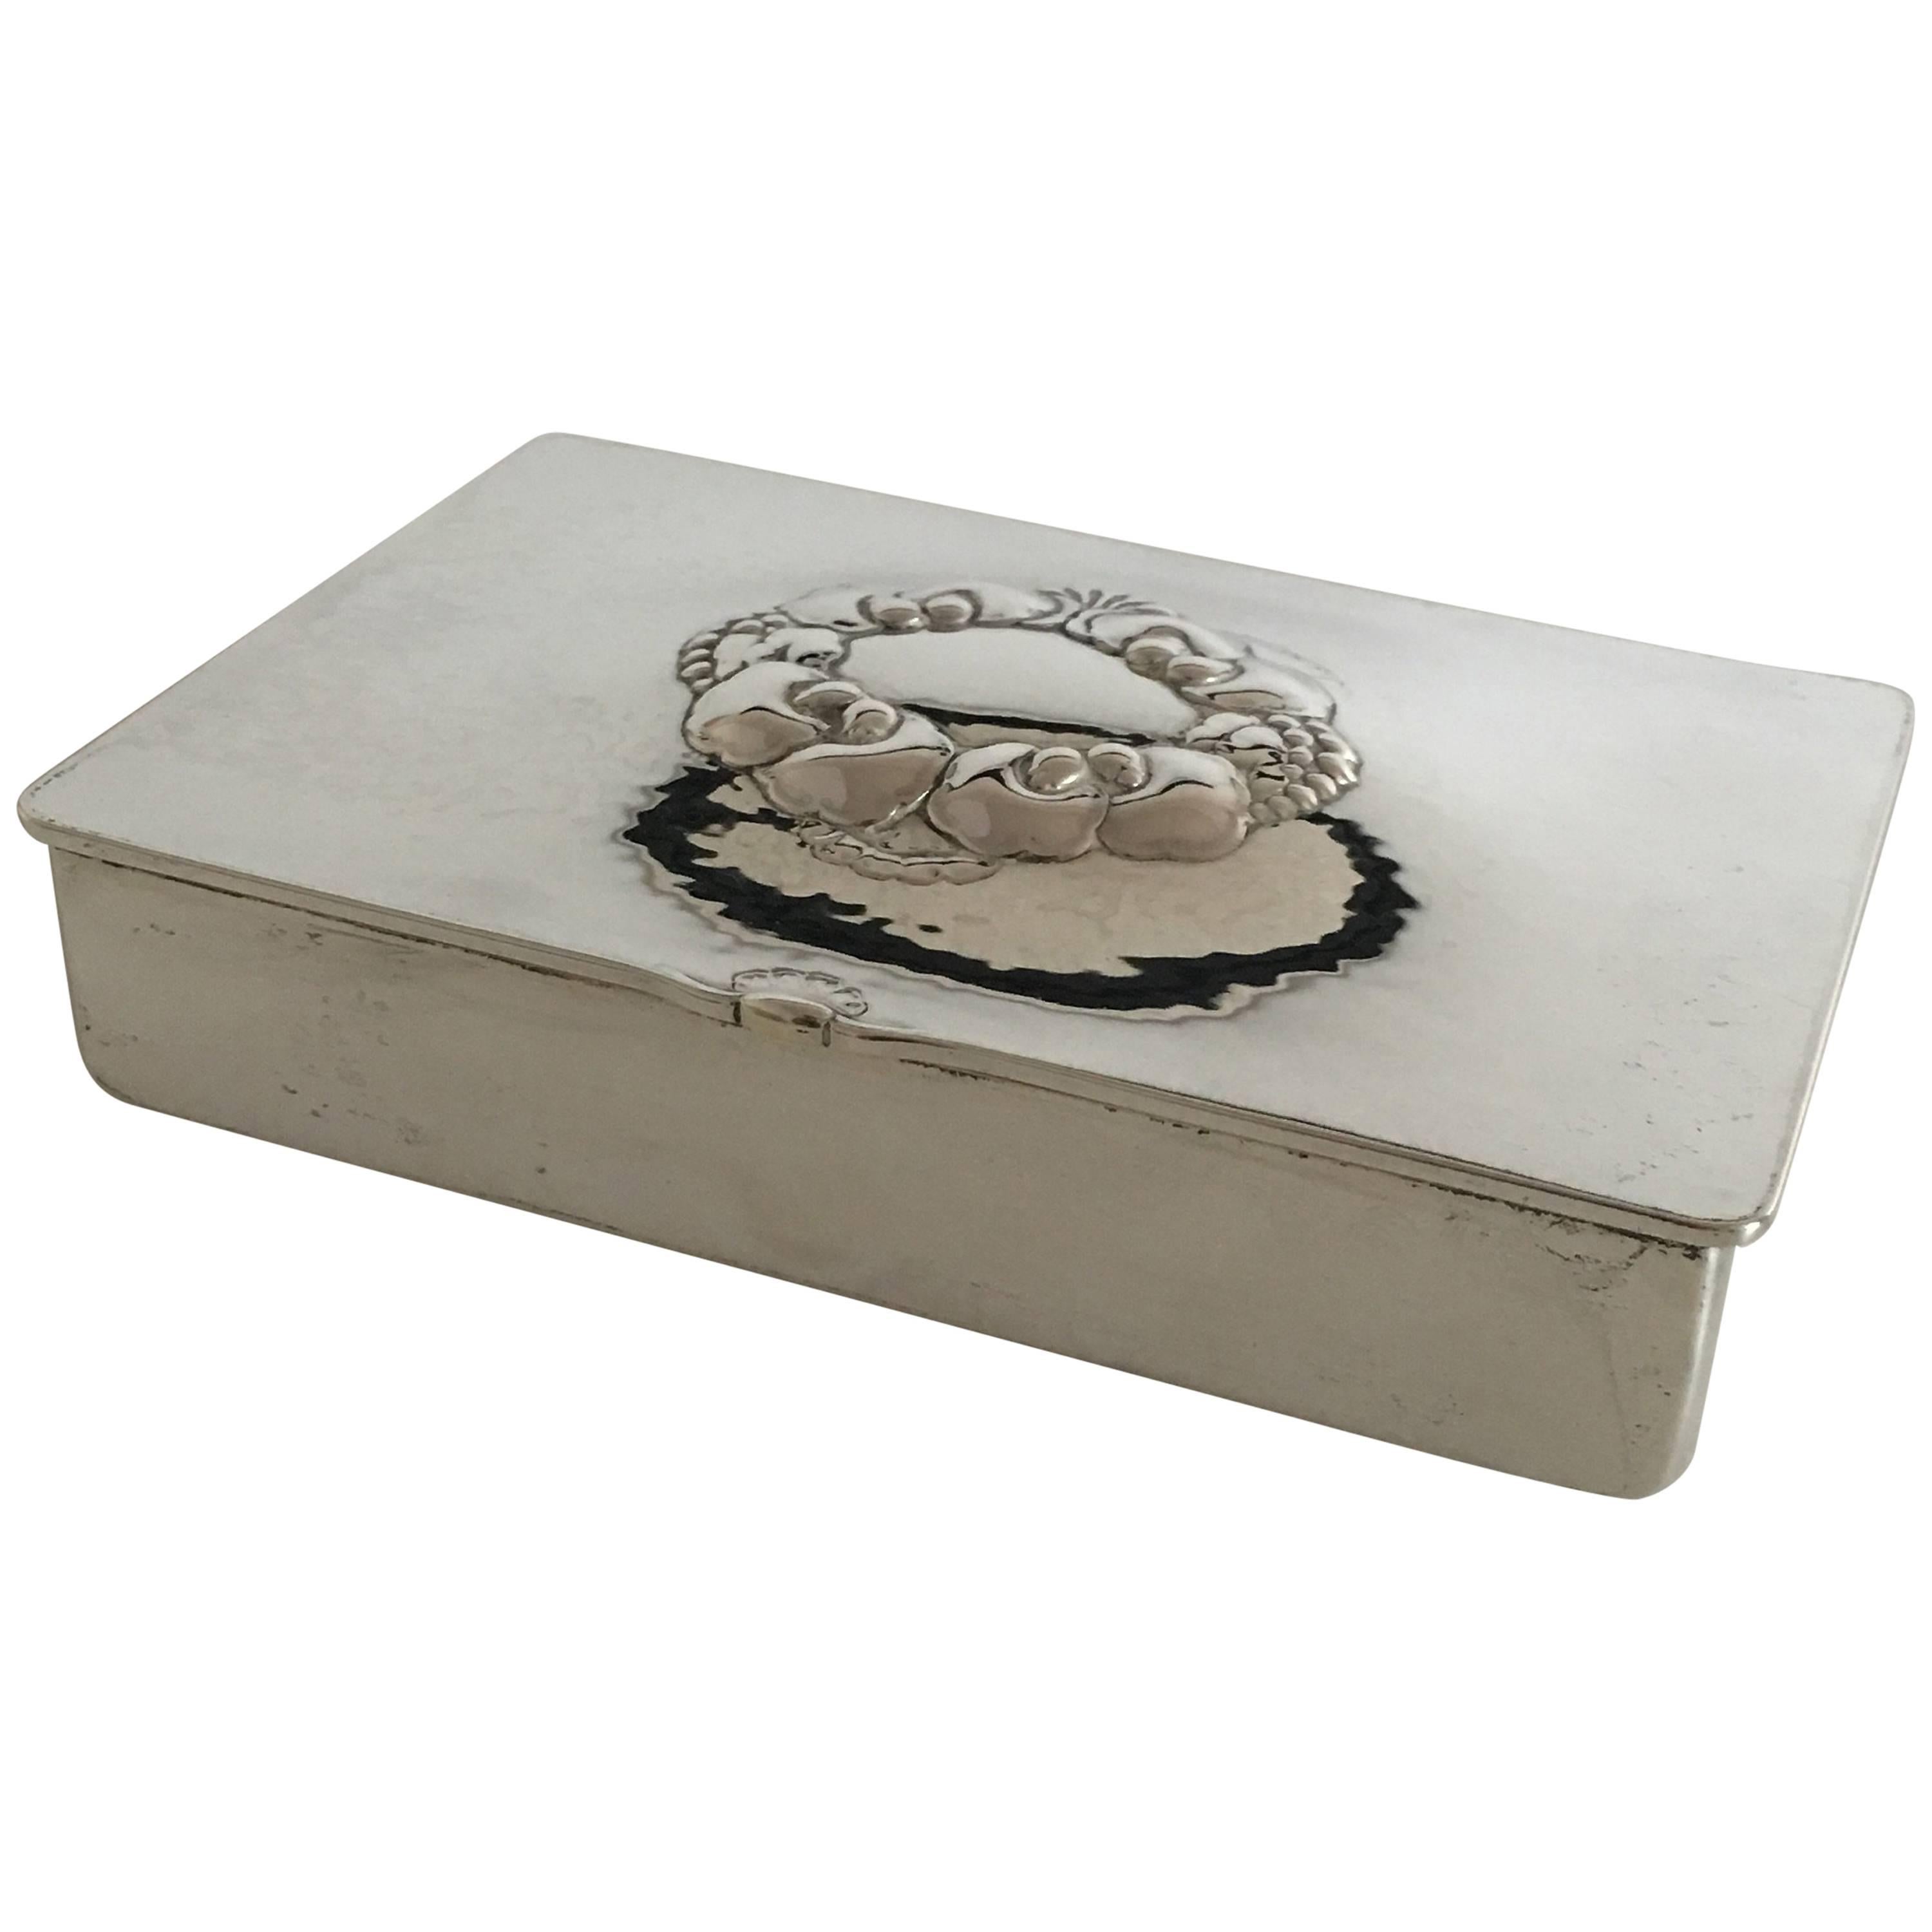 Georg Jensen Sterling Silver Box or Cigarette Box #507A For Sale